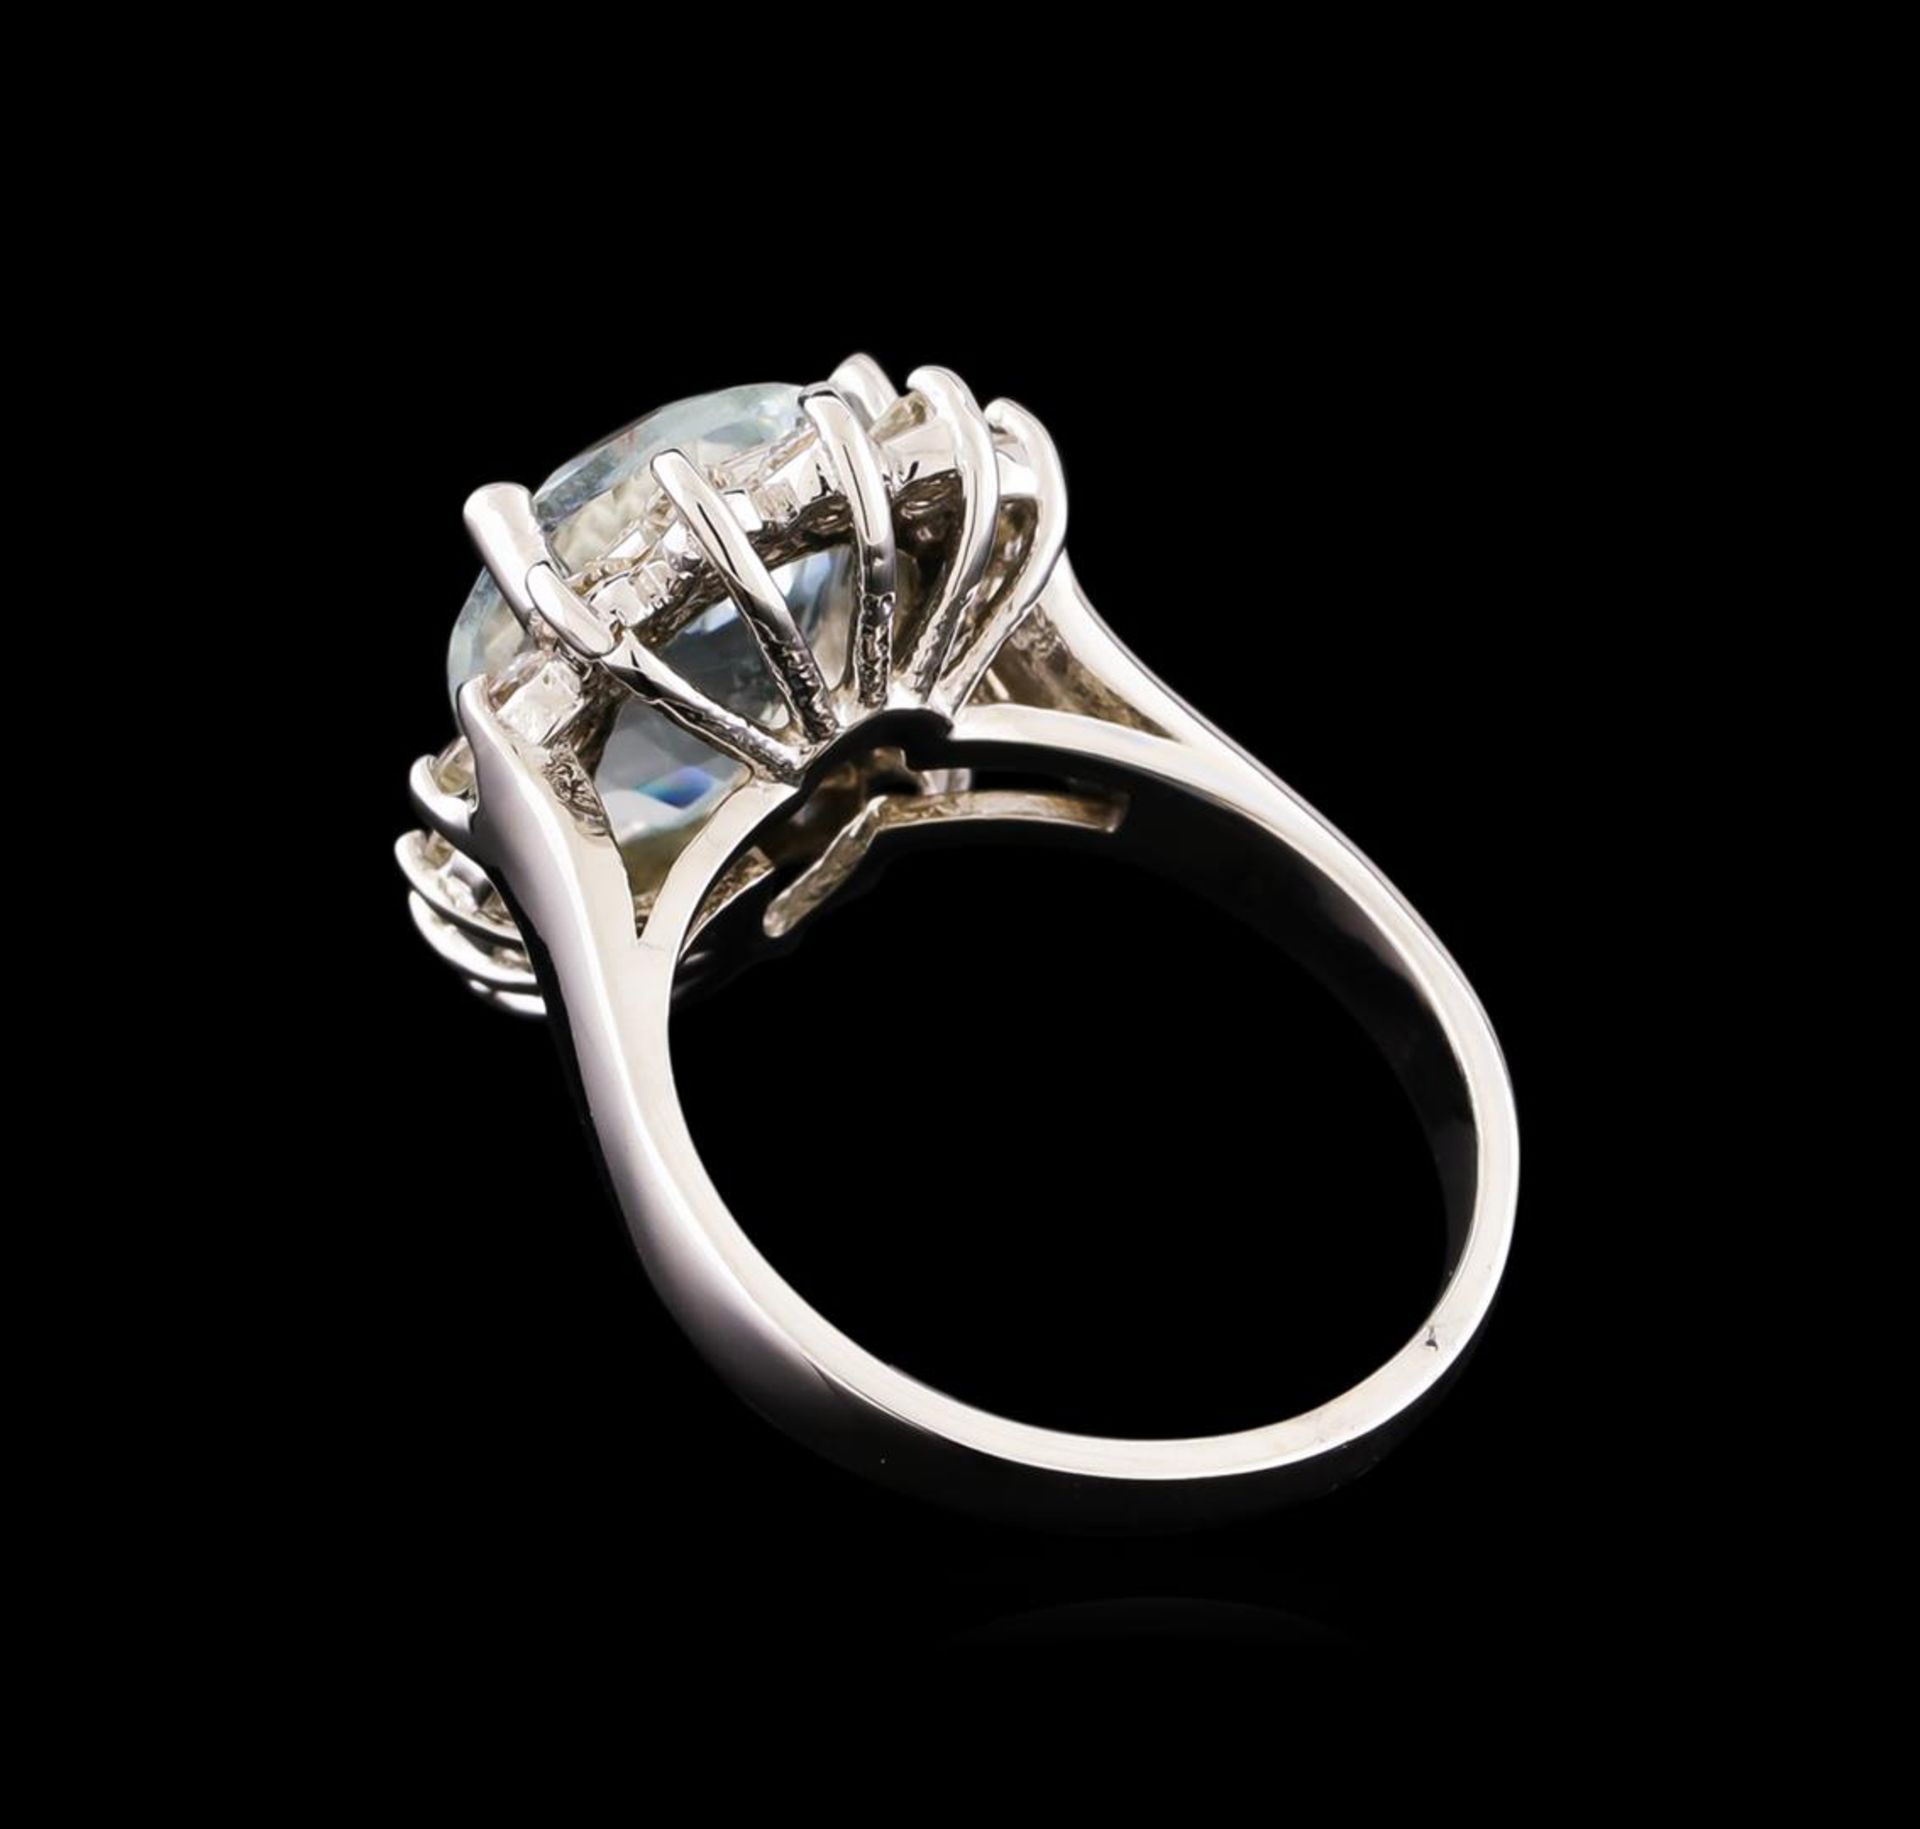 4.48 ctw Aquamarine and Diamond Ring - 14KT White Gold - Image 3 of 5